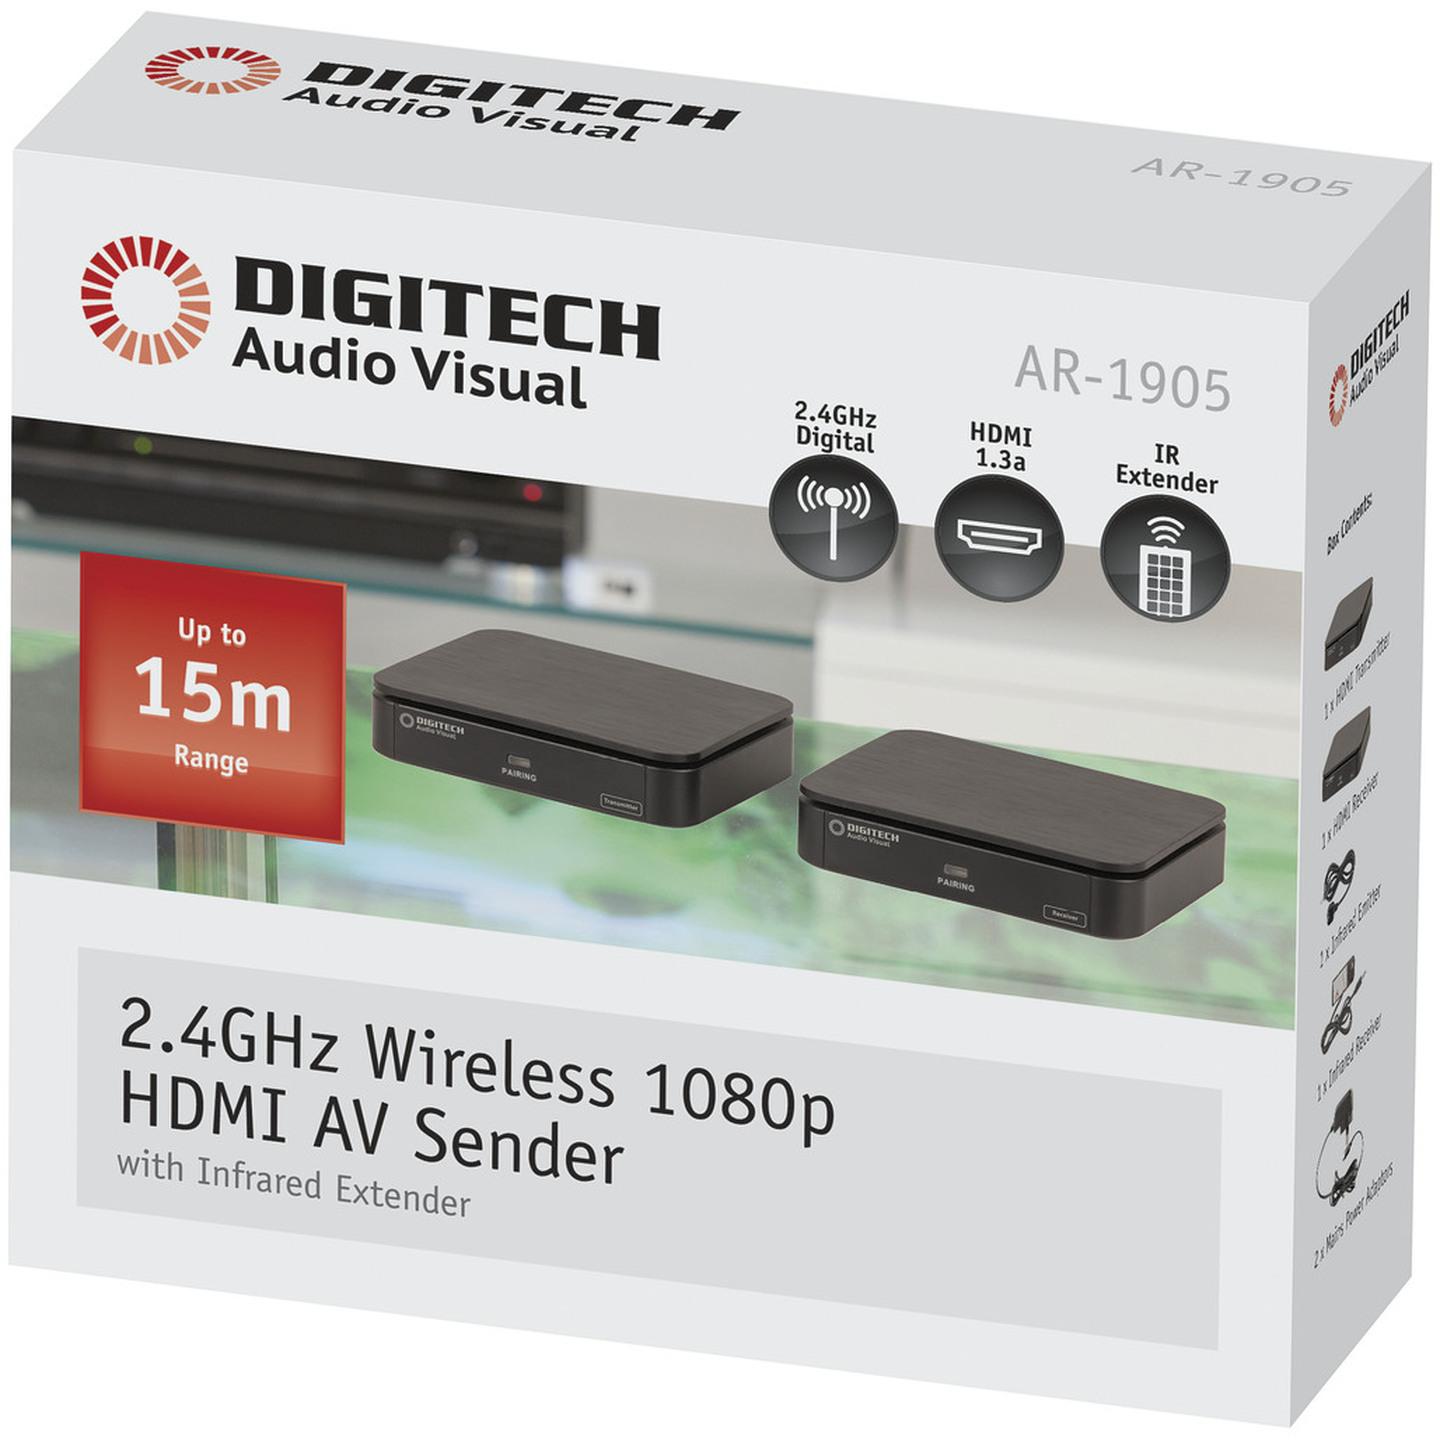 2.4GHz HDMI 1080p Wireless AV Sender